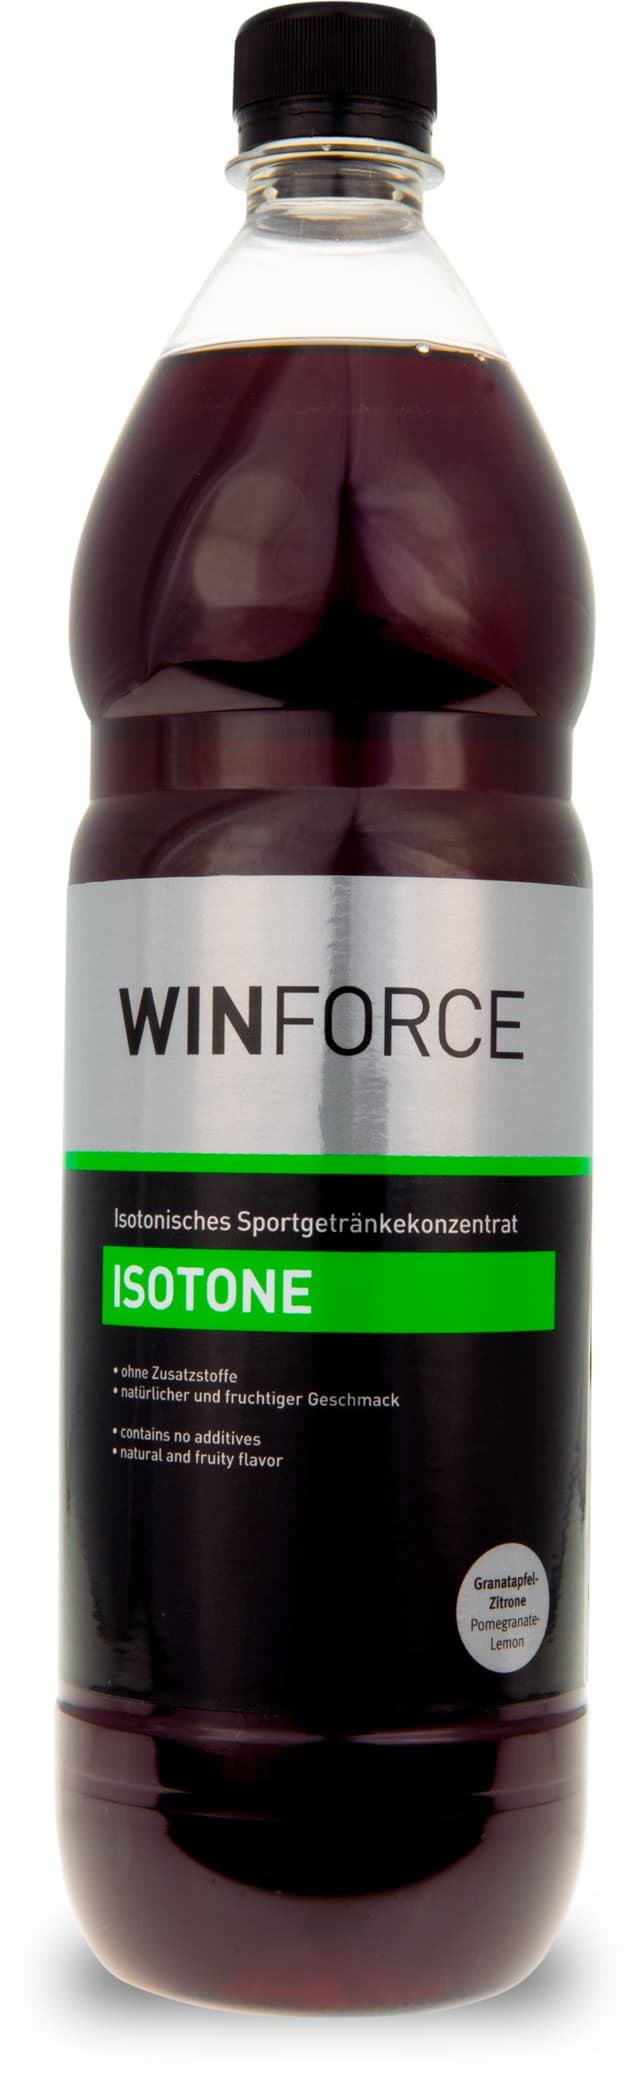 winforce Isotone Sportgetränk farbig